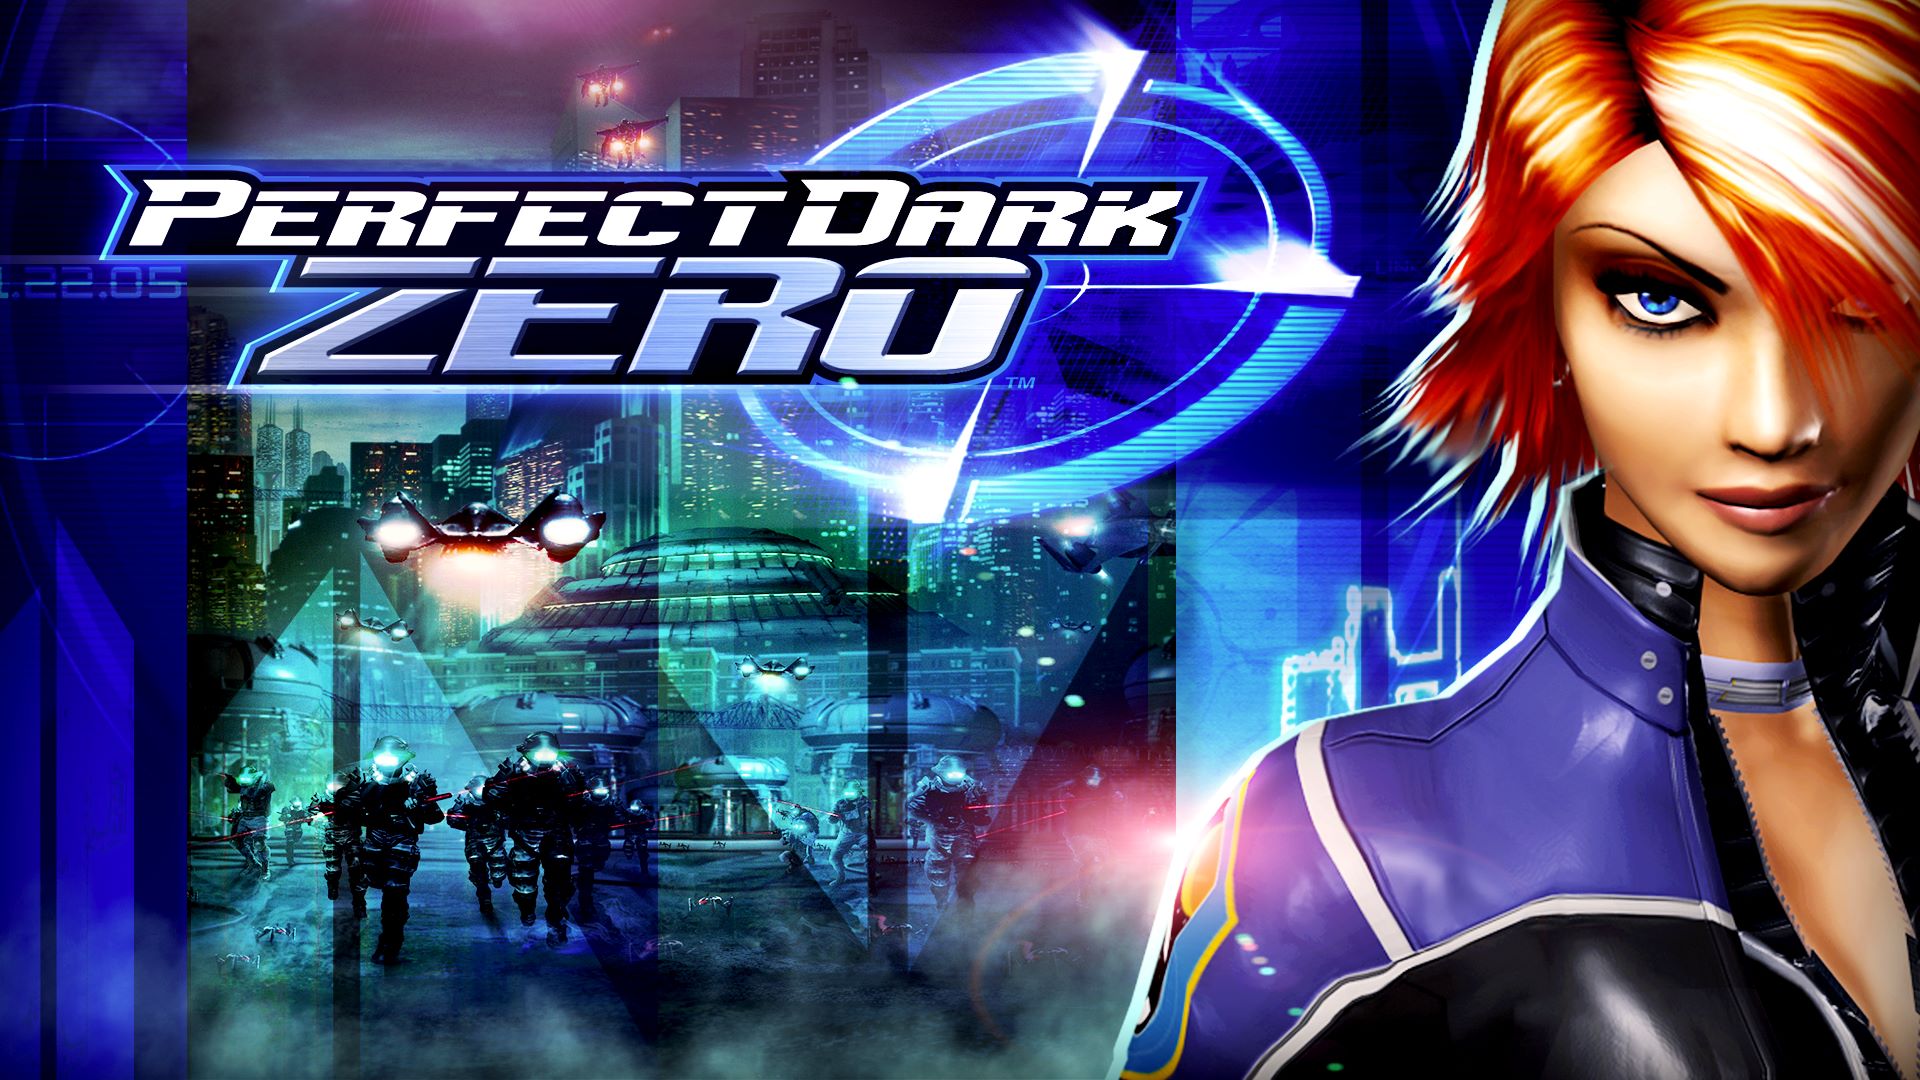 perfect dark zero sequel